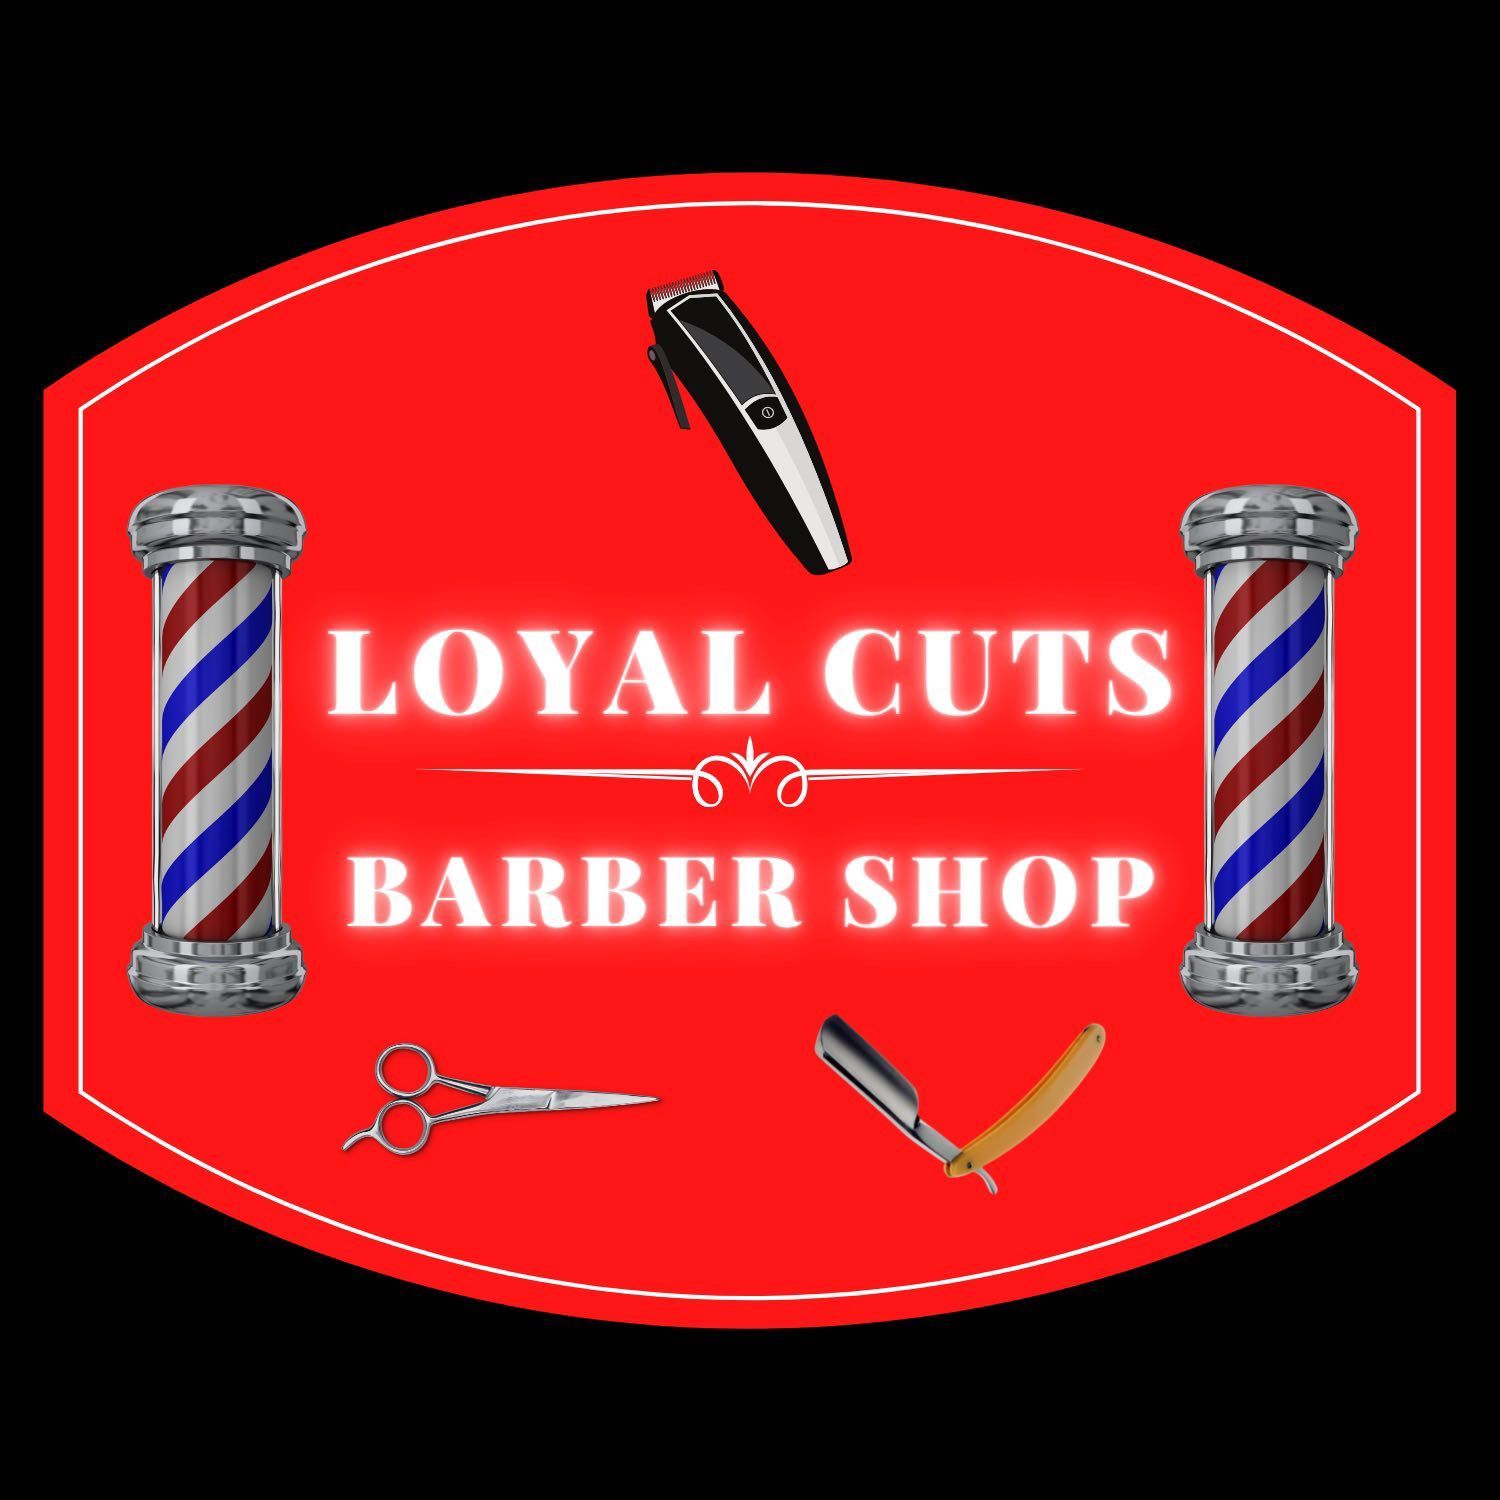 Loyal Cuts, 416 E 36th St, Loft 9, Charlotte, 28205